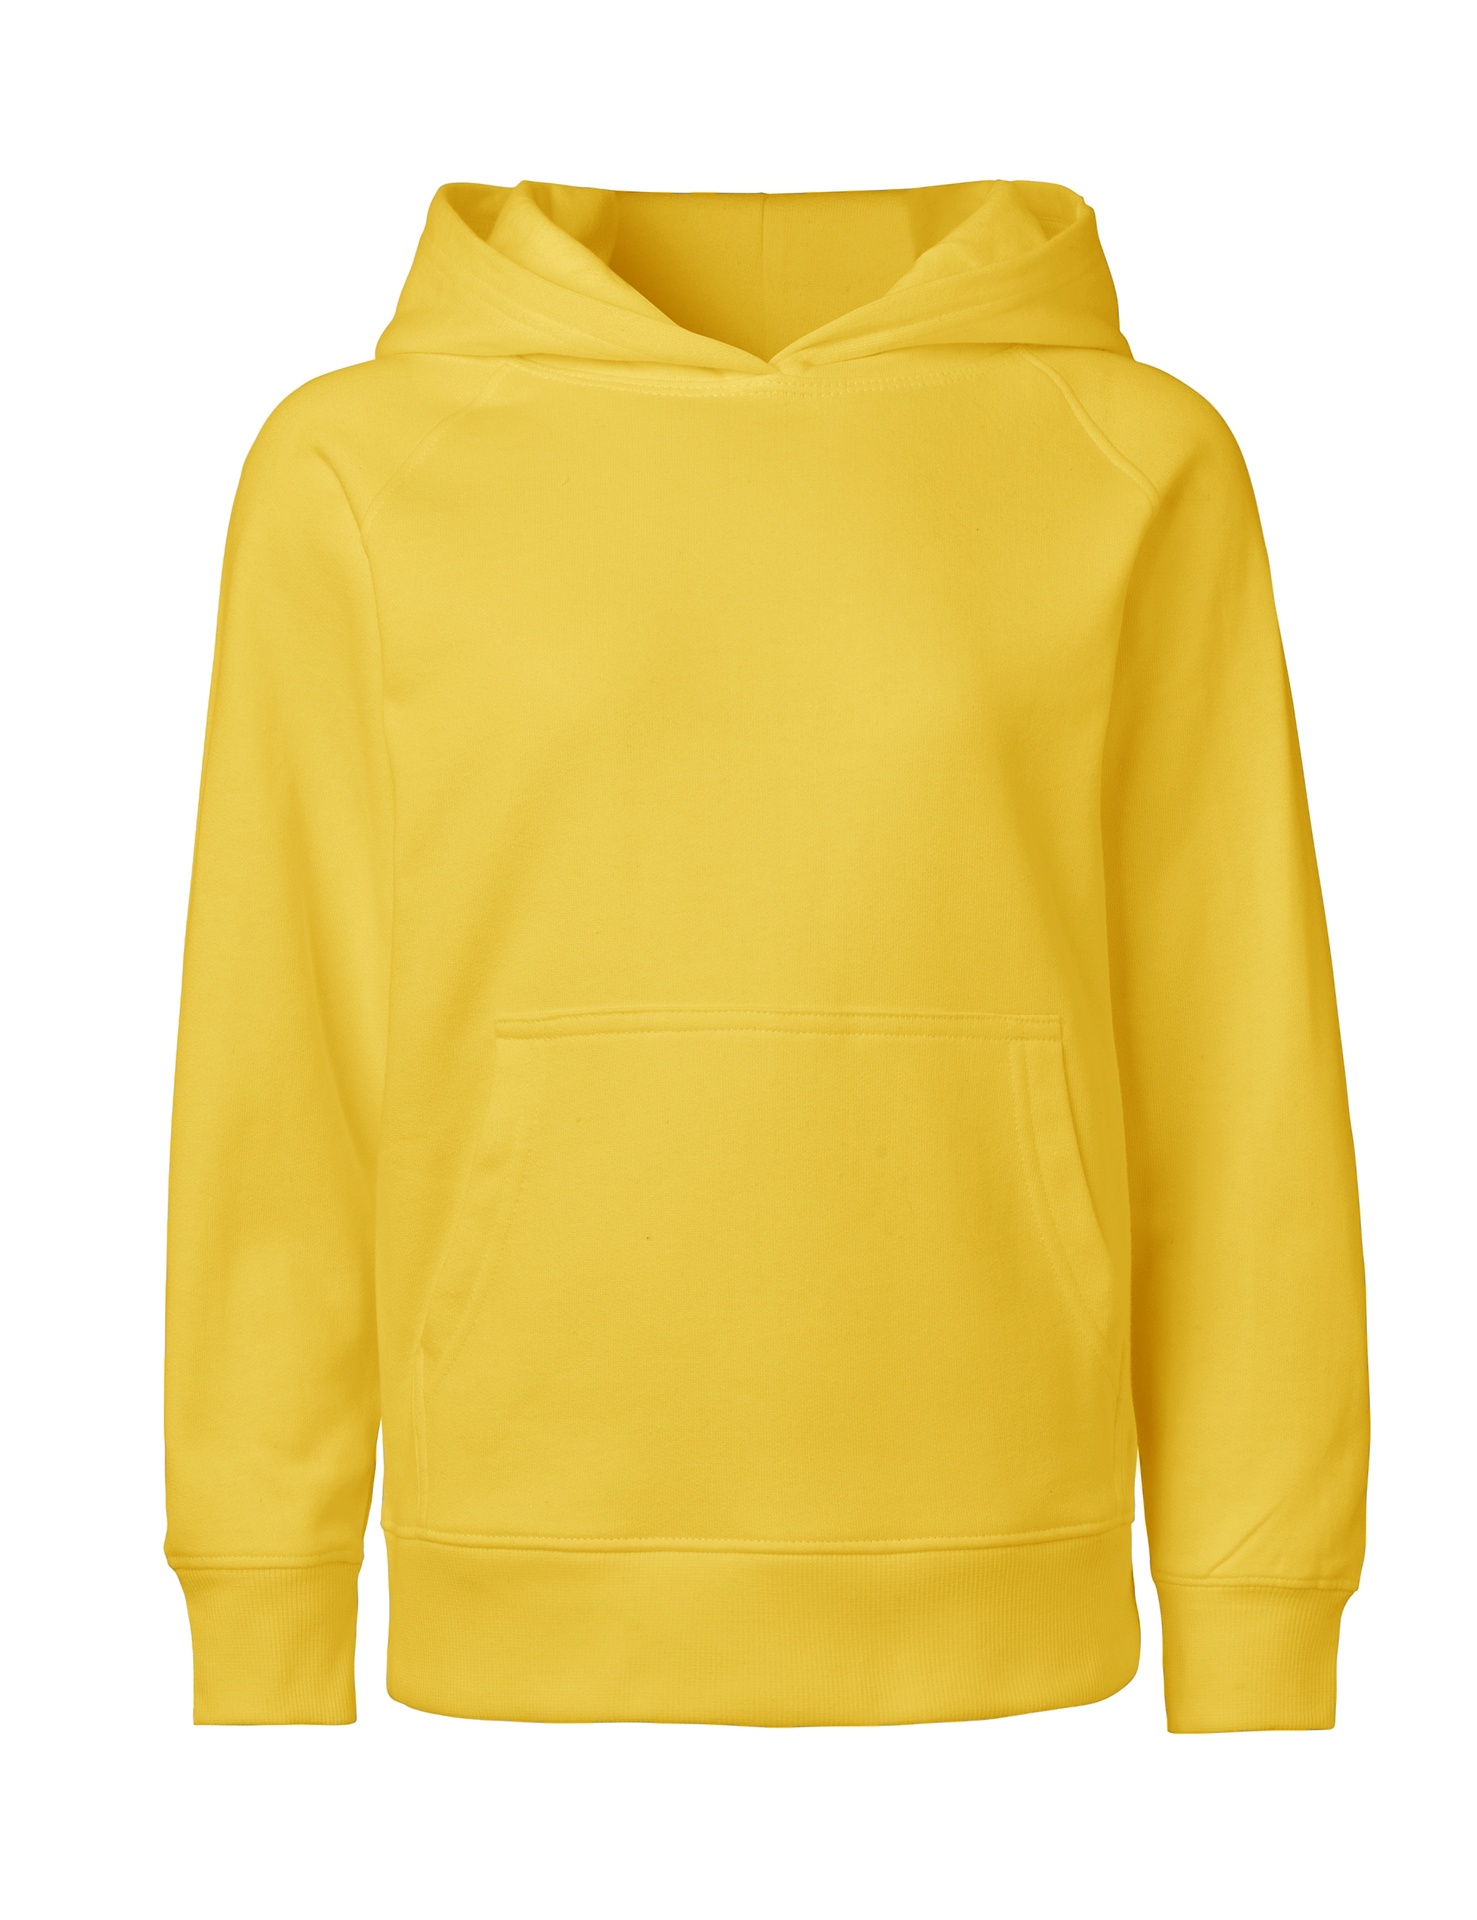 [PR/05318] Kids Hoodie (Yellow 98, 92/98 cm)